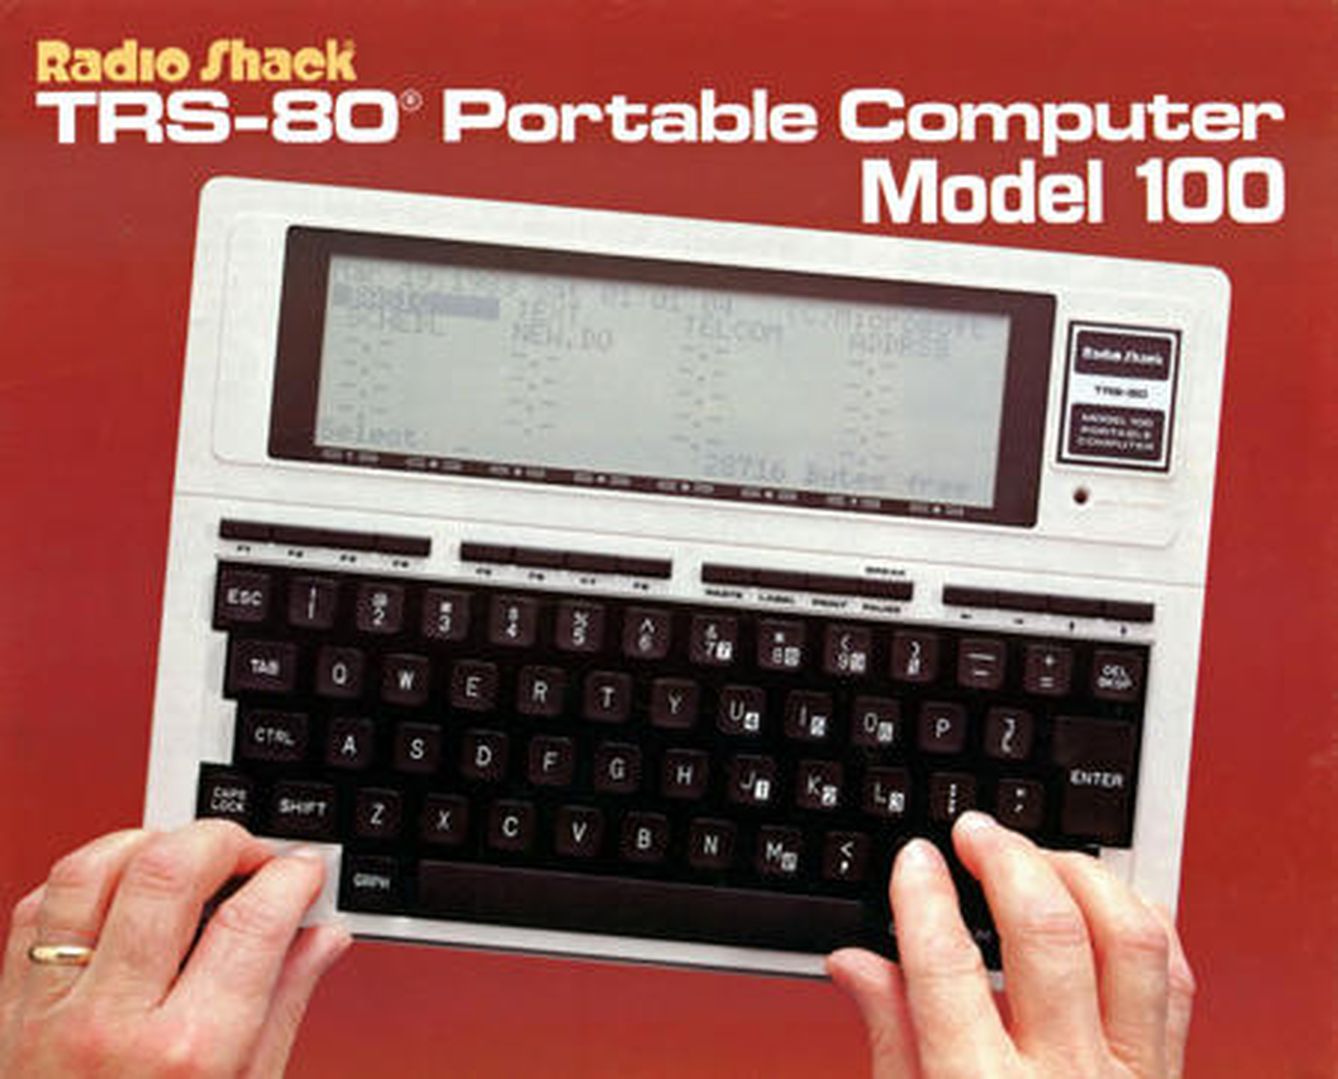 El portátil TRS-80 Model 100 se hizo muy popular